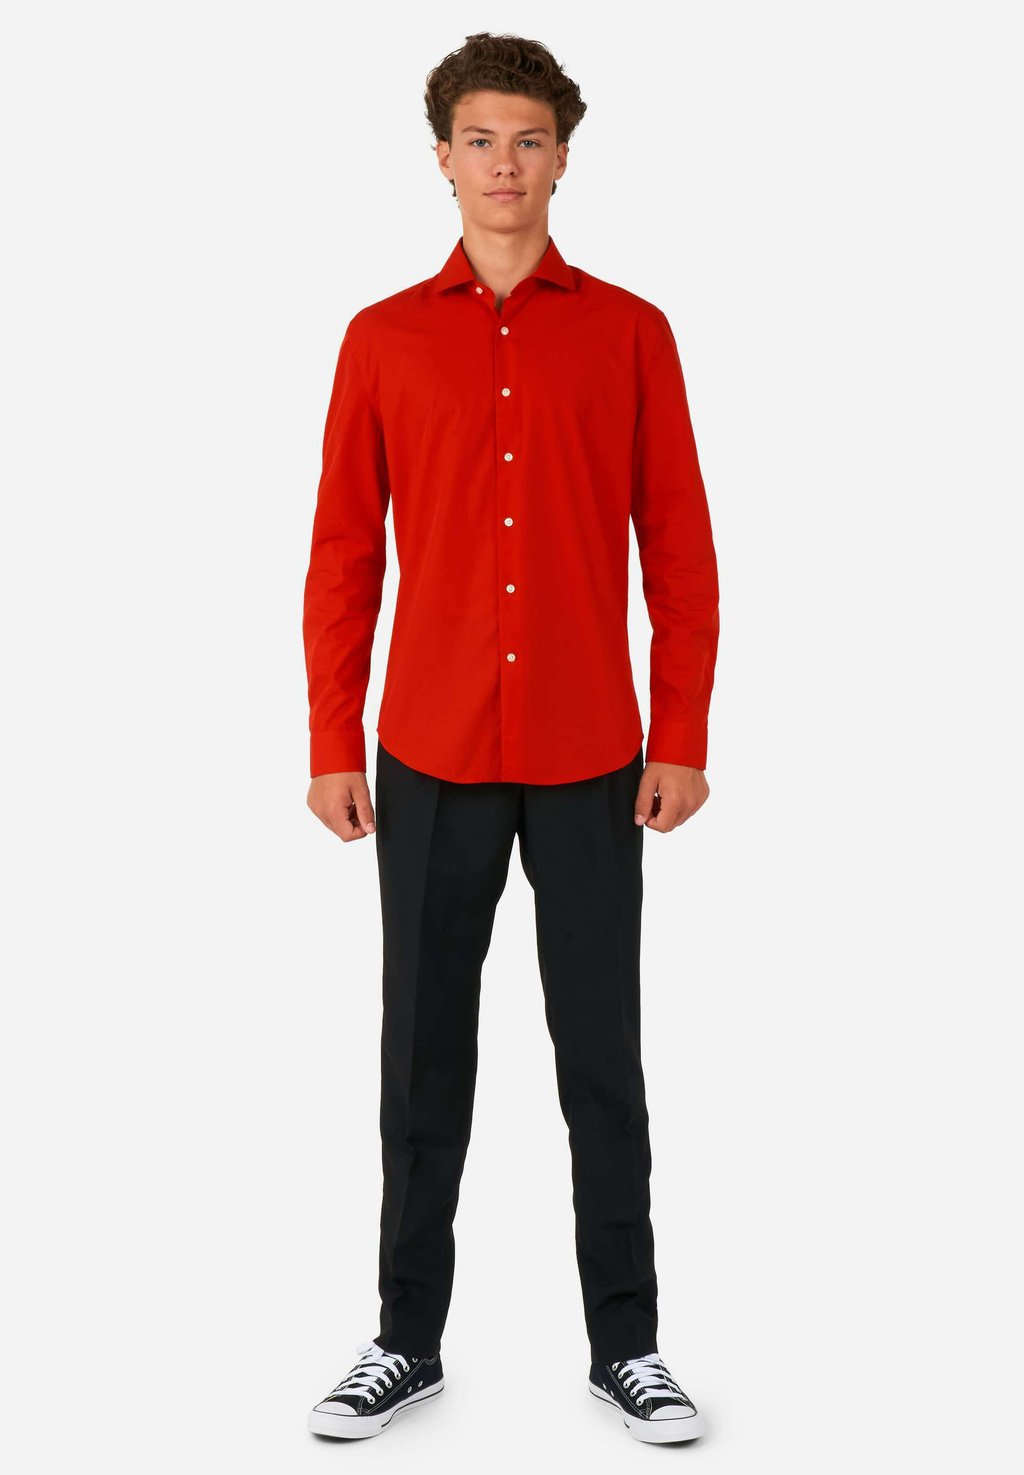 классическая рубашка solid color opposuits цвет red devil Рубашка LS DEVIL OppoSuits, цвет red